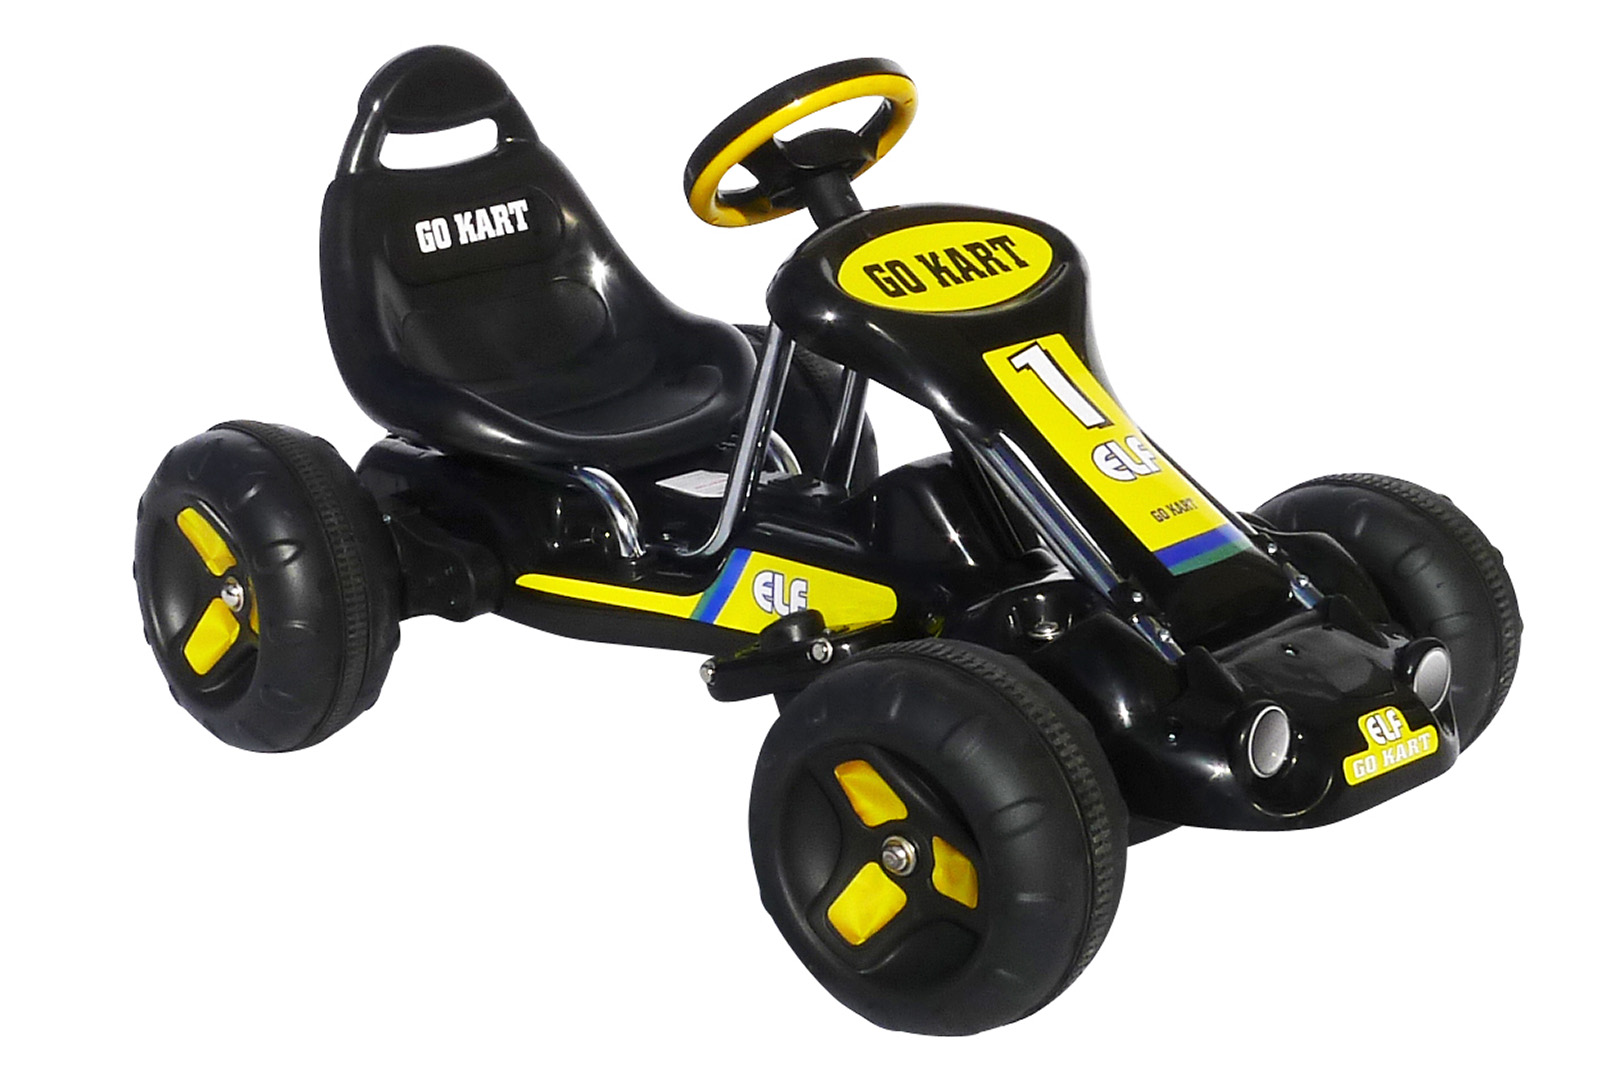 9788 ACTIONBIKES MOTORS Kinder-Elektro-Go-Kart Go-Kart